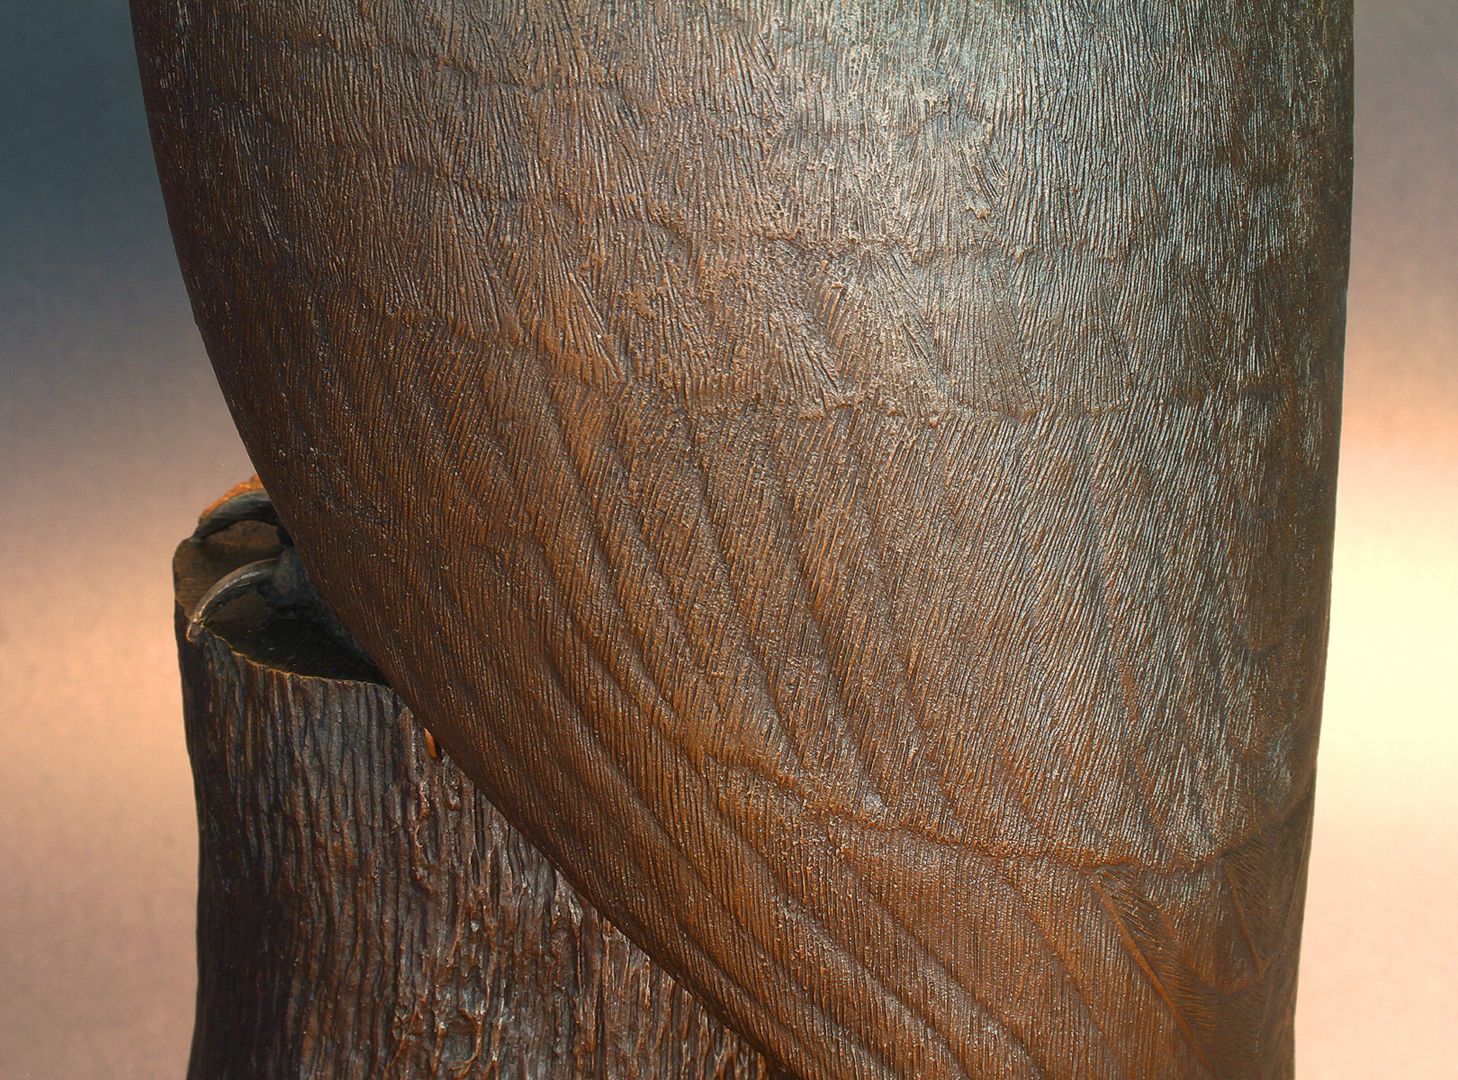 Tawny owl Plumage, detail